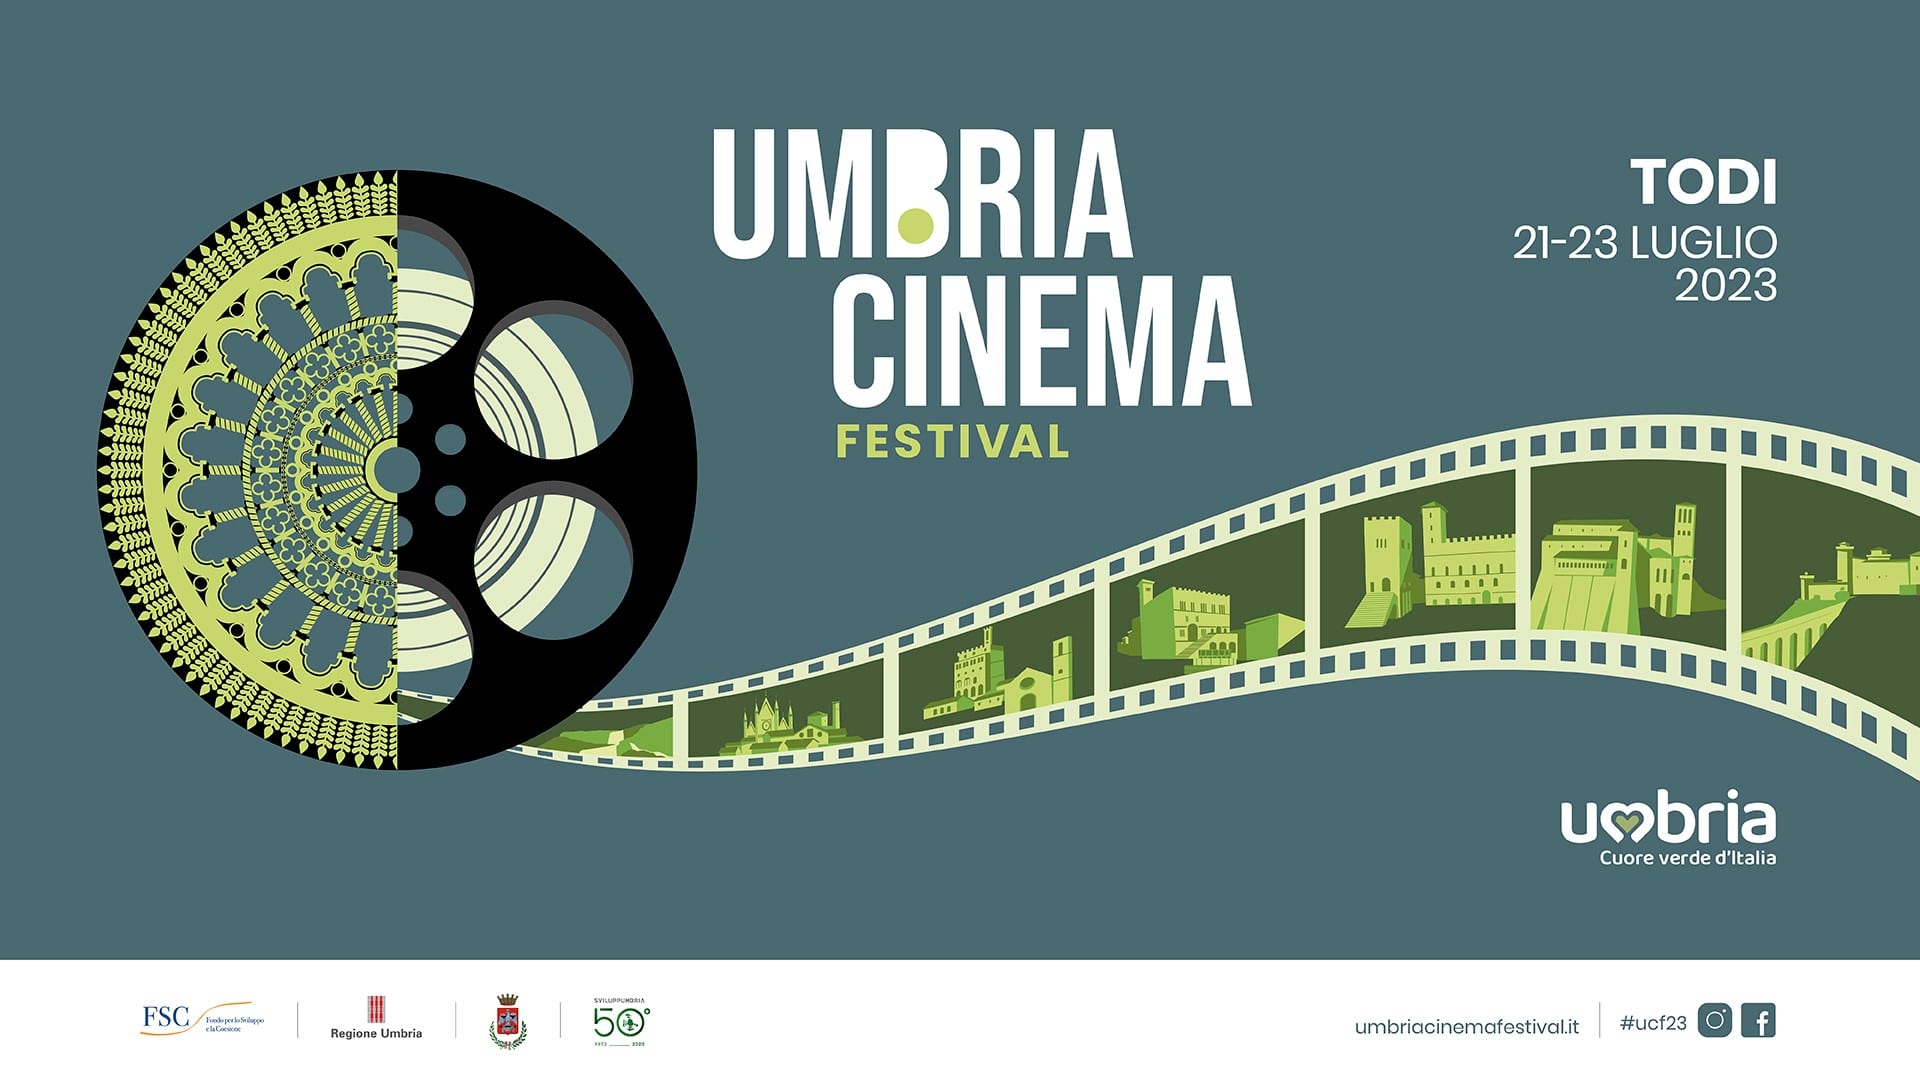 Umbria cinema festival